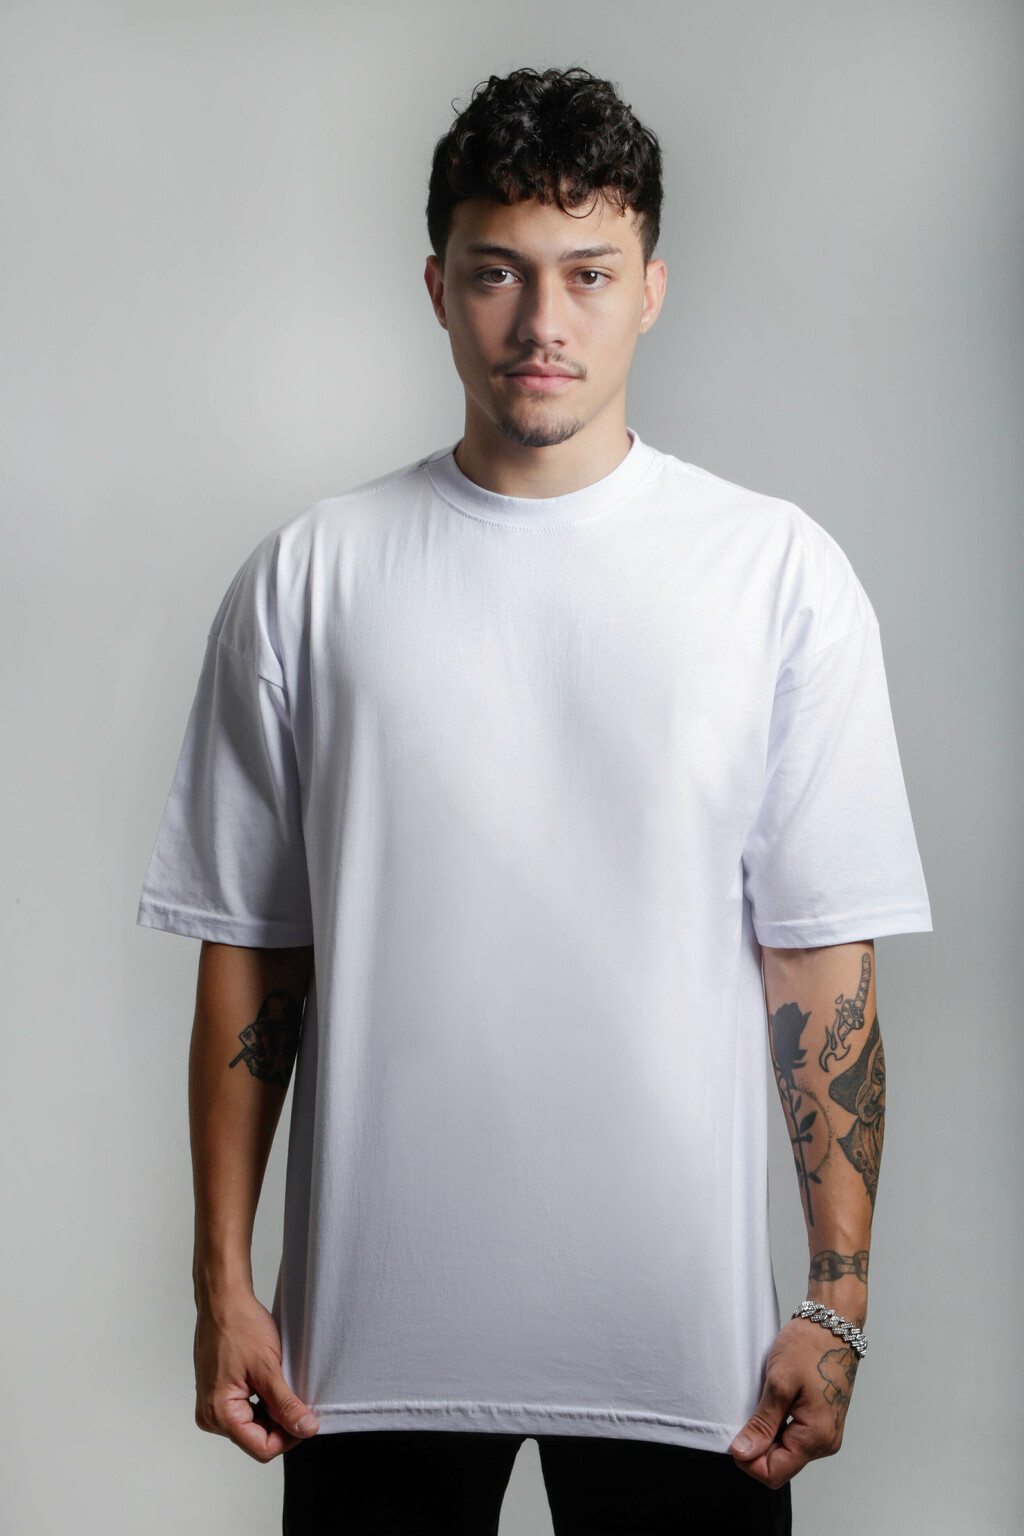 Camiseta OVERSIZED branca lisa blusa camisa Streetwear em algodão 30.1  modelo Premium OVERSIZED